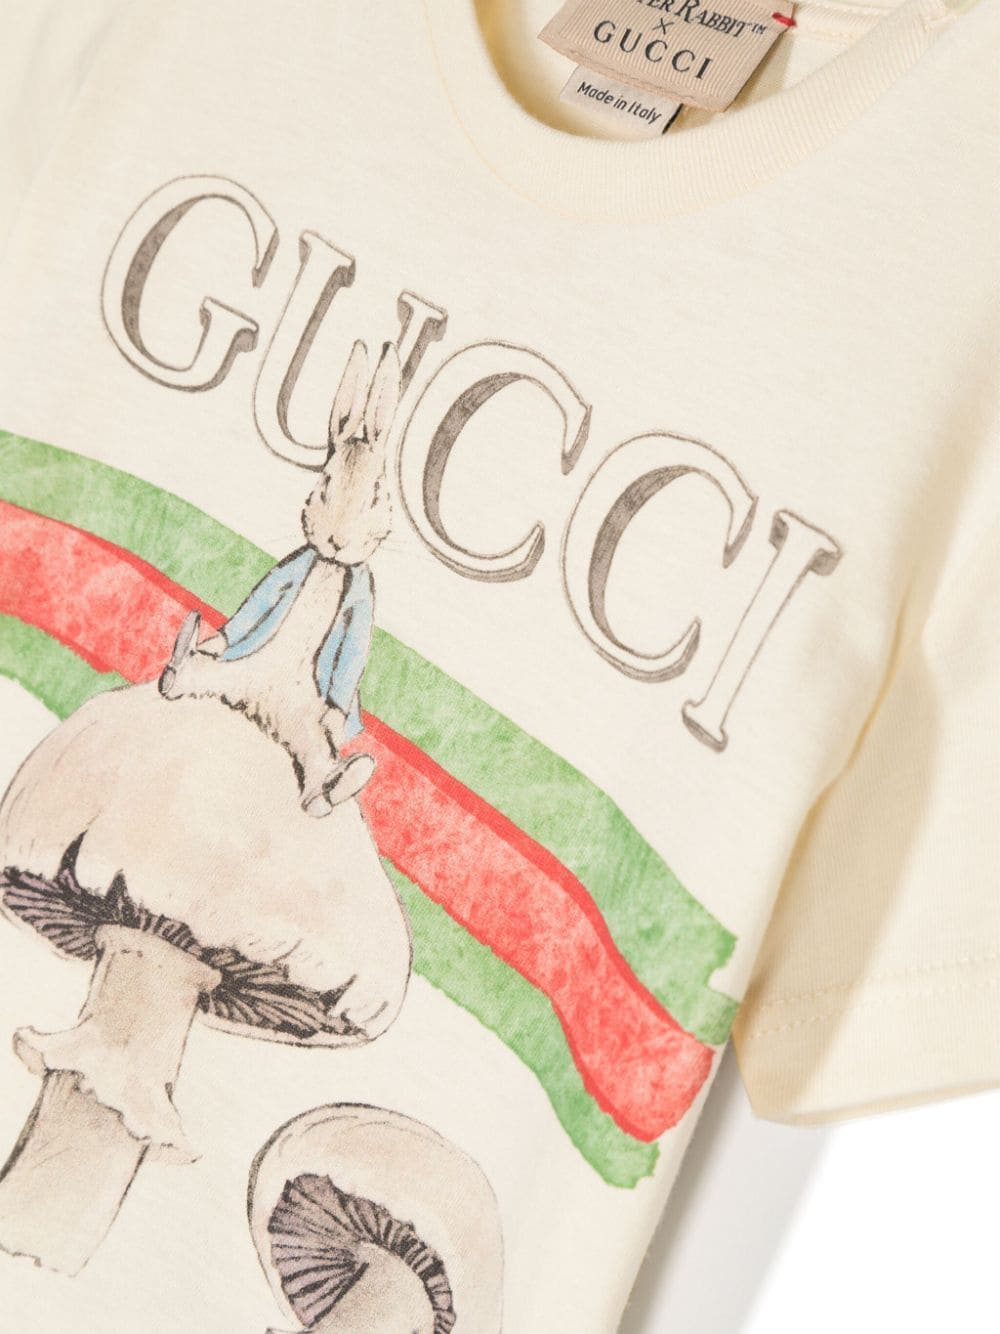 Gucci Kids t-shirt con stampa